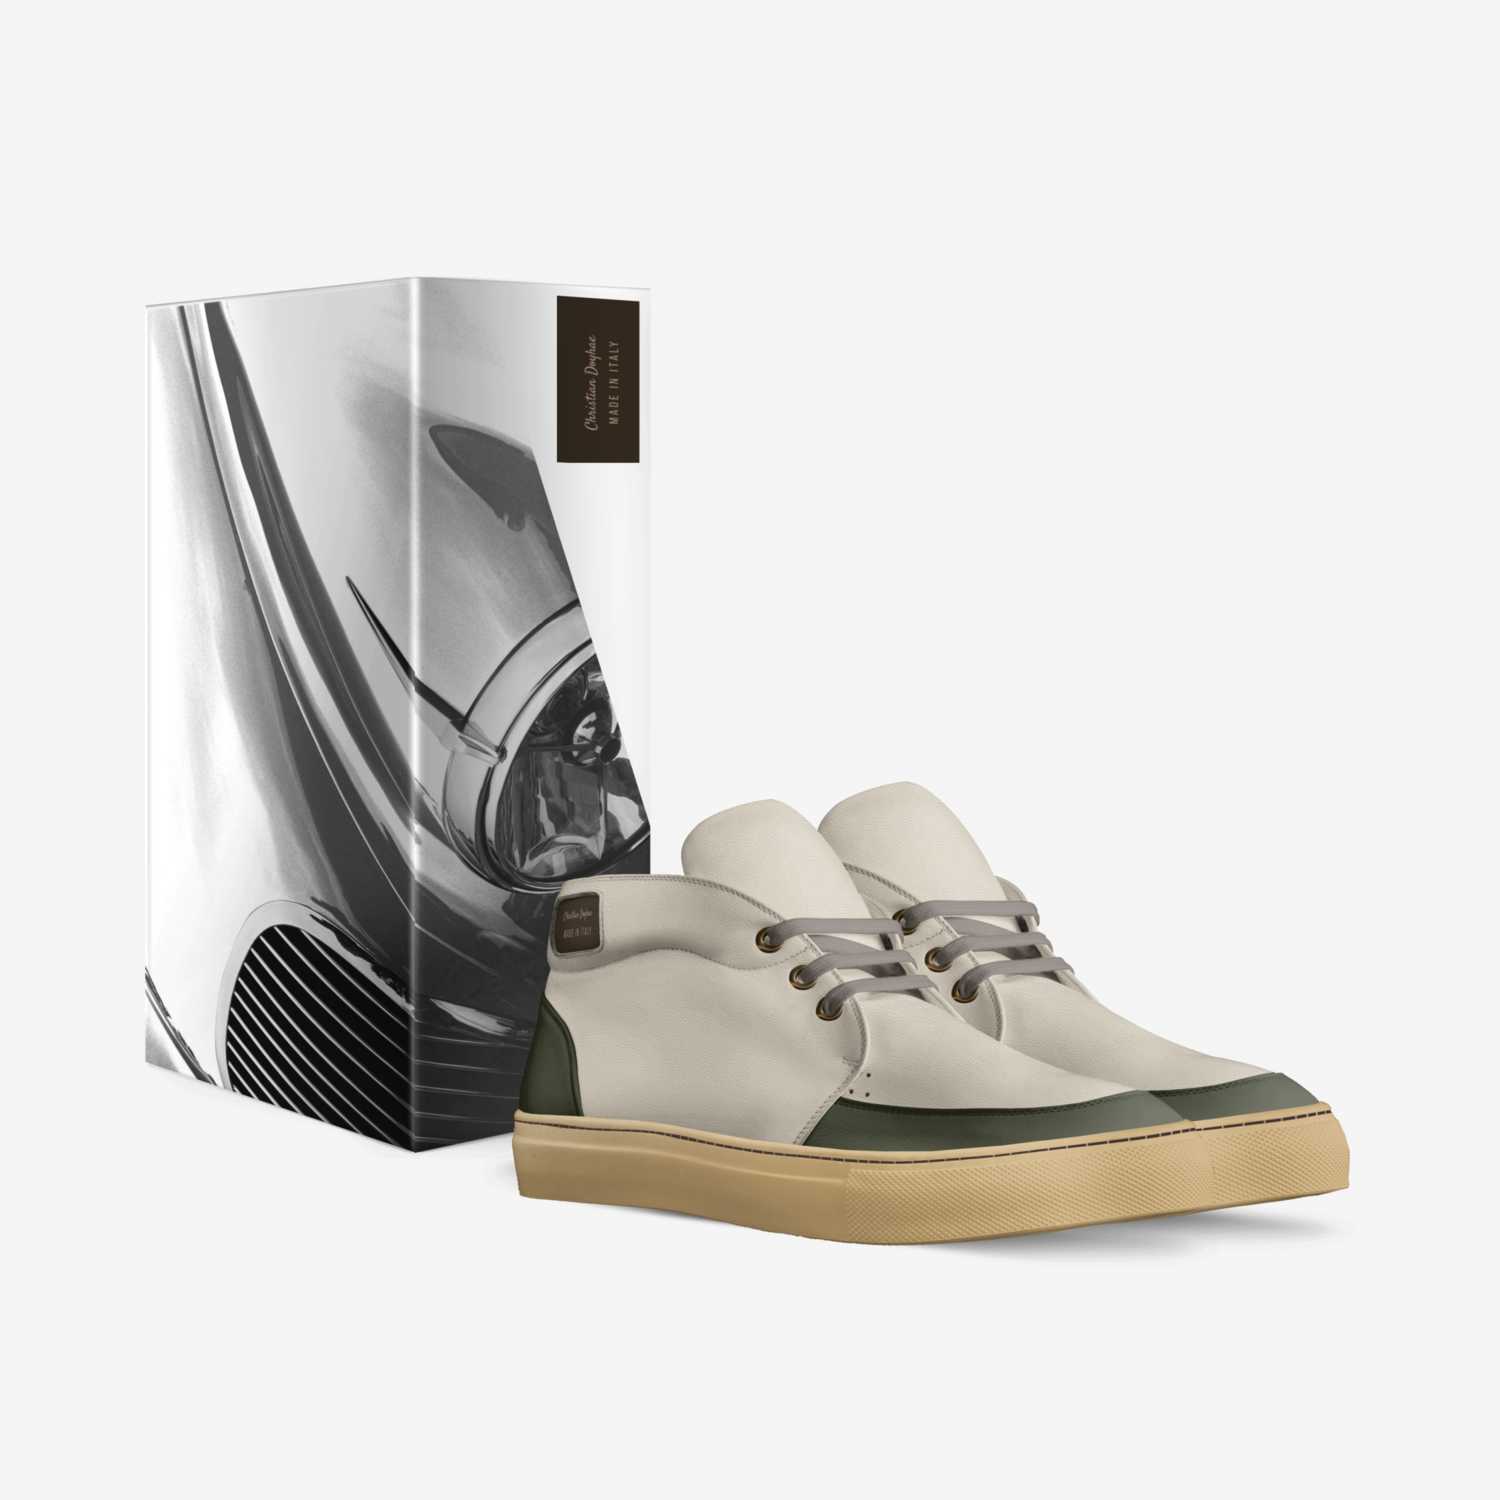 Christian Doyhae  custom made in Italy shoes by Zeborah Foulks | Box view